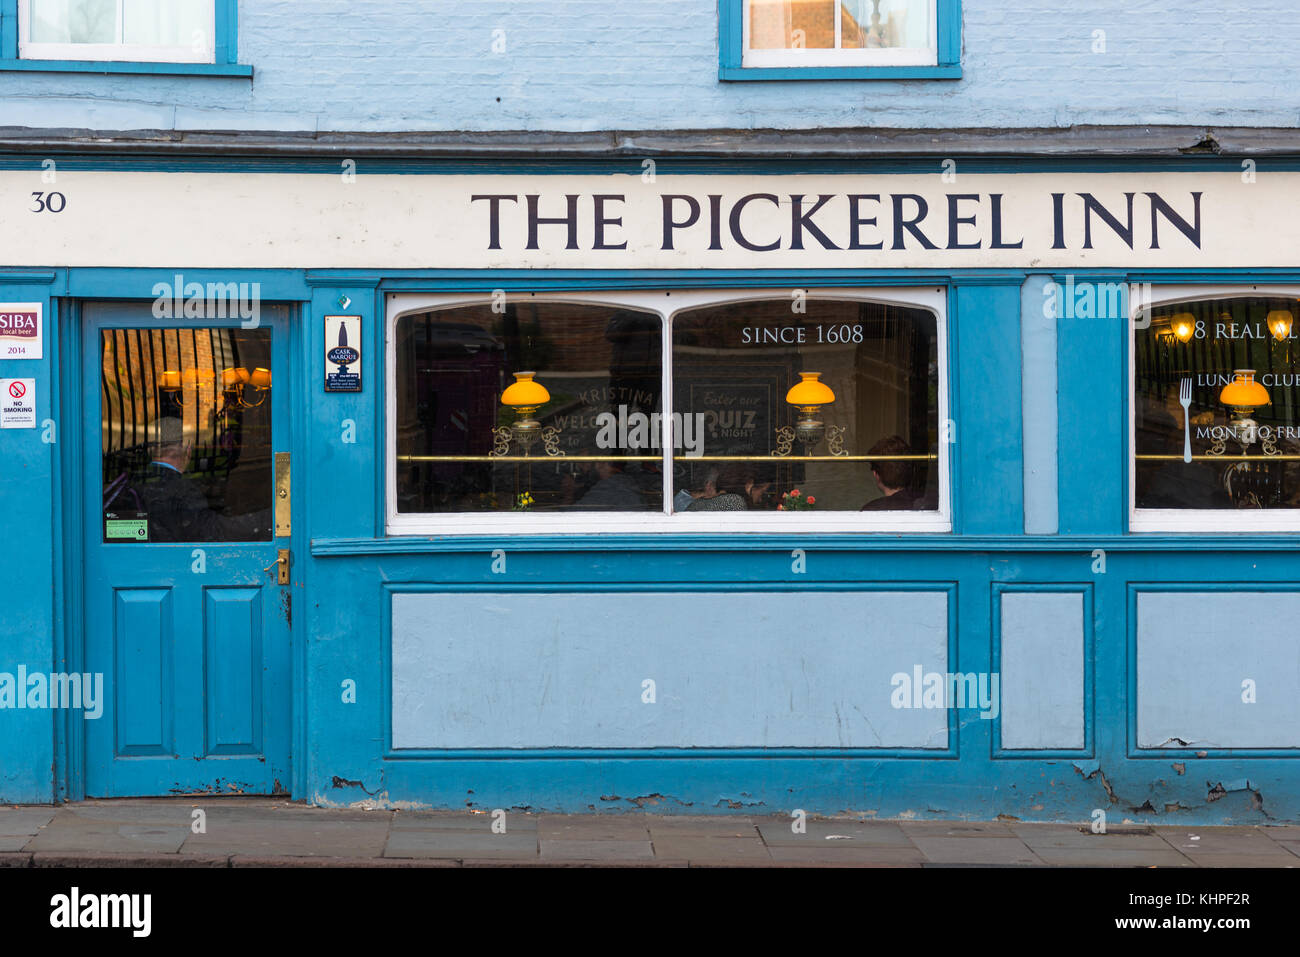 Ancient pub The Pickerel Inn, founded in 1608 on Bridge St Cambridge city, England, UK. Stock Photo